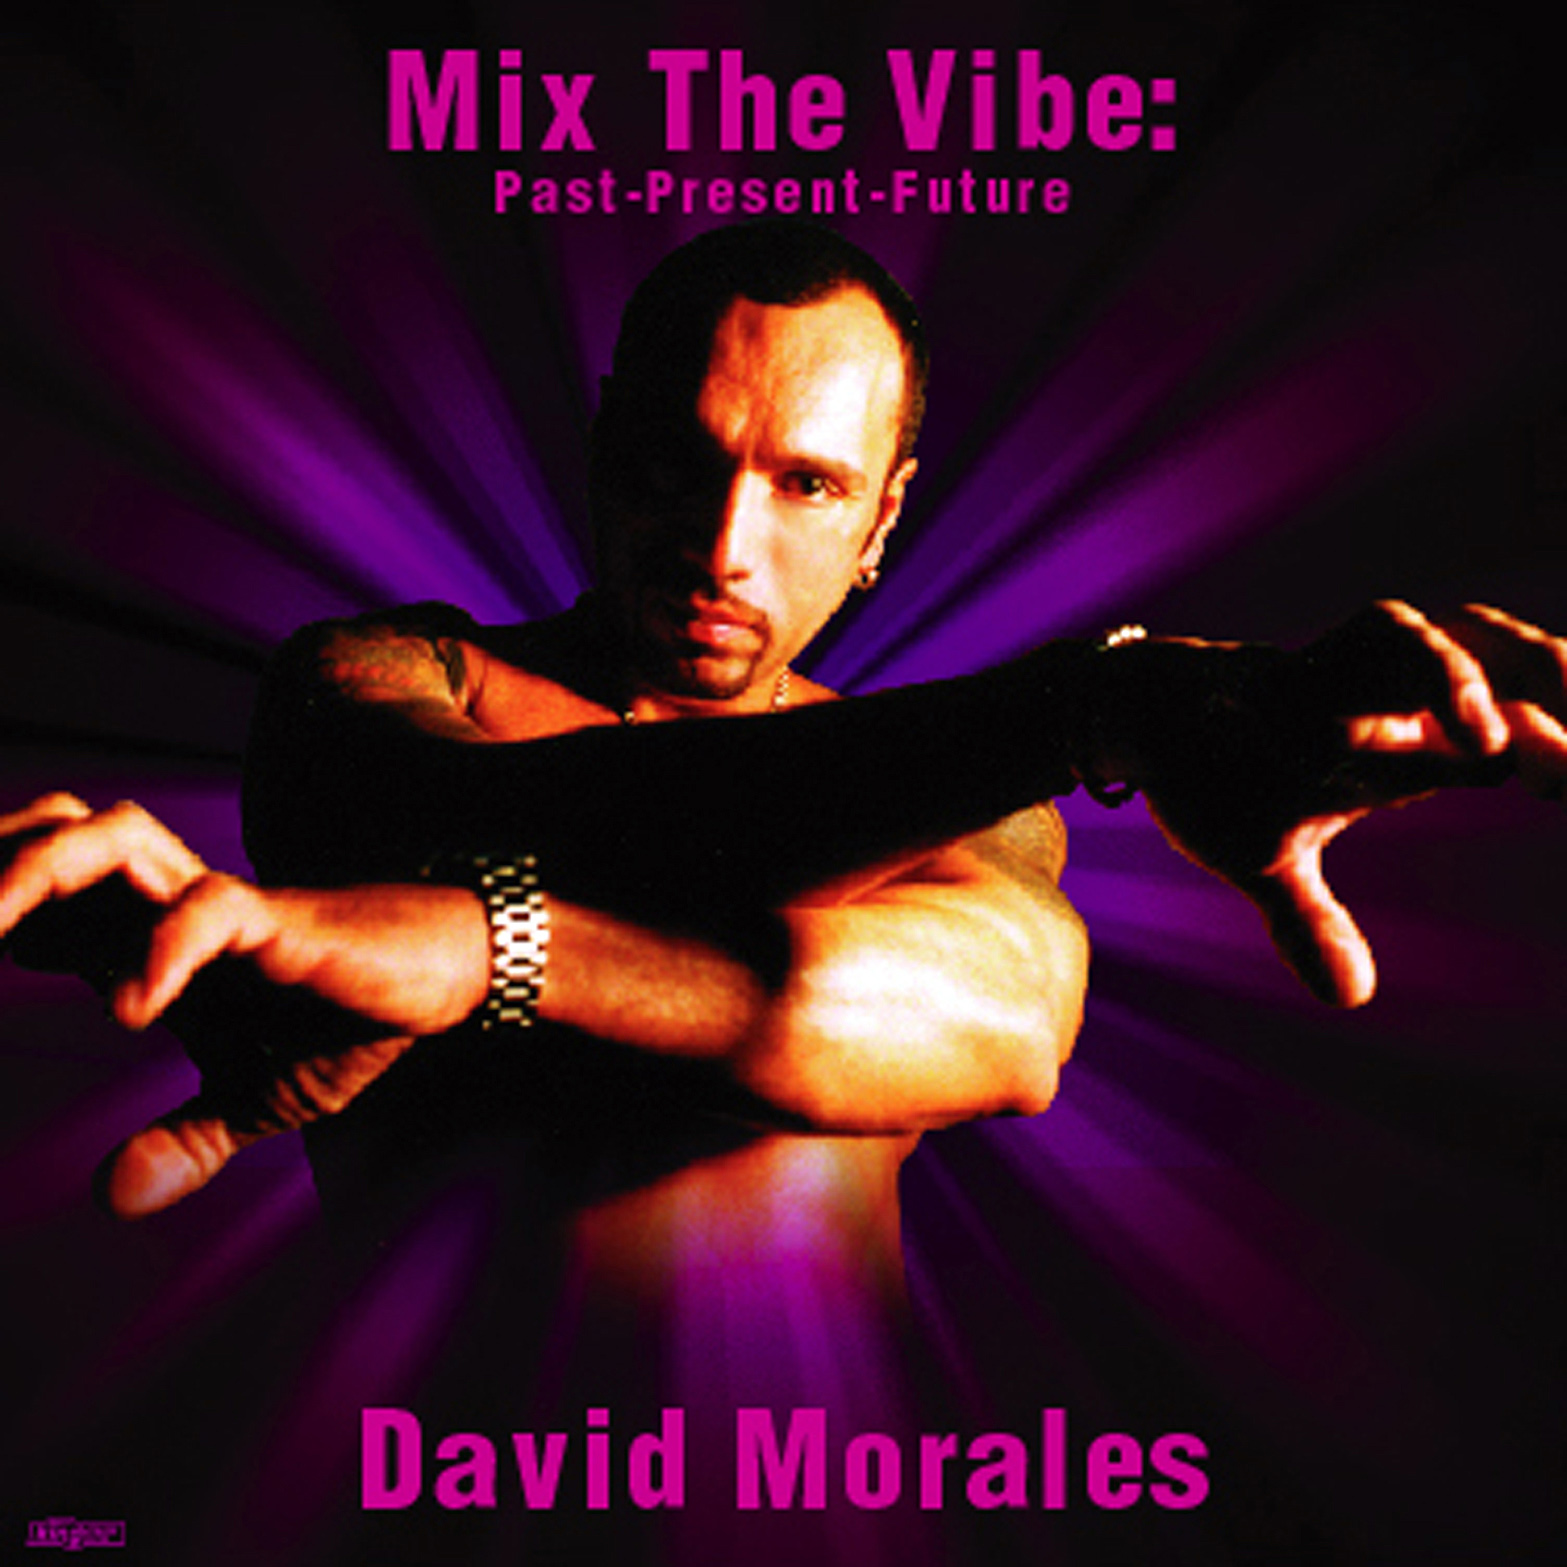 David Morales - Mix The Vibe: Past-Present-Future